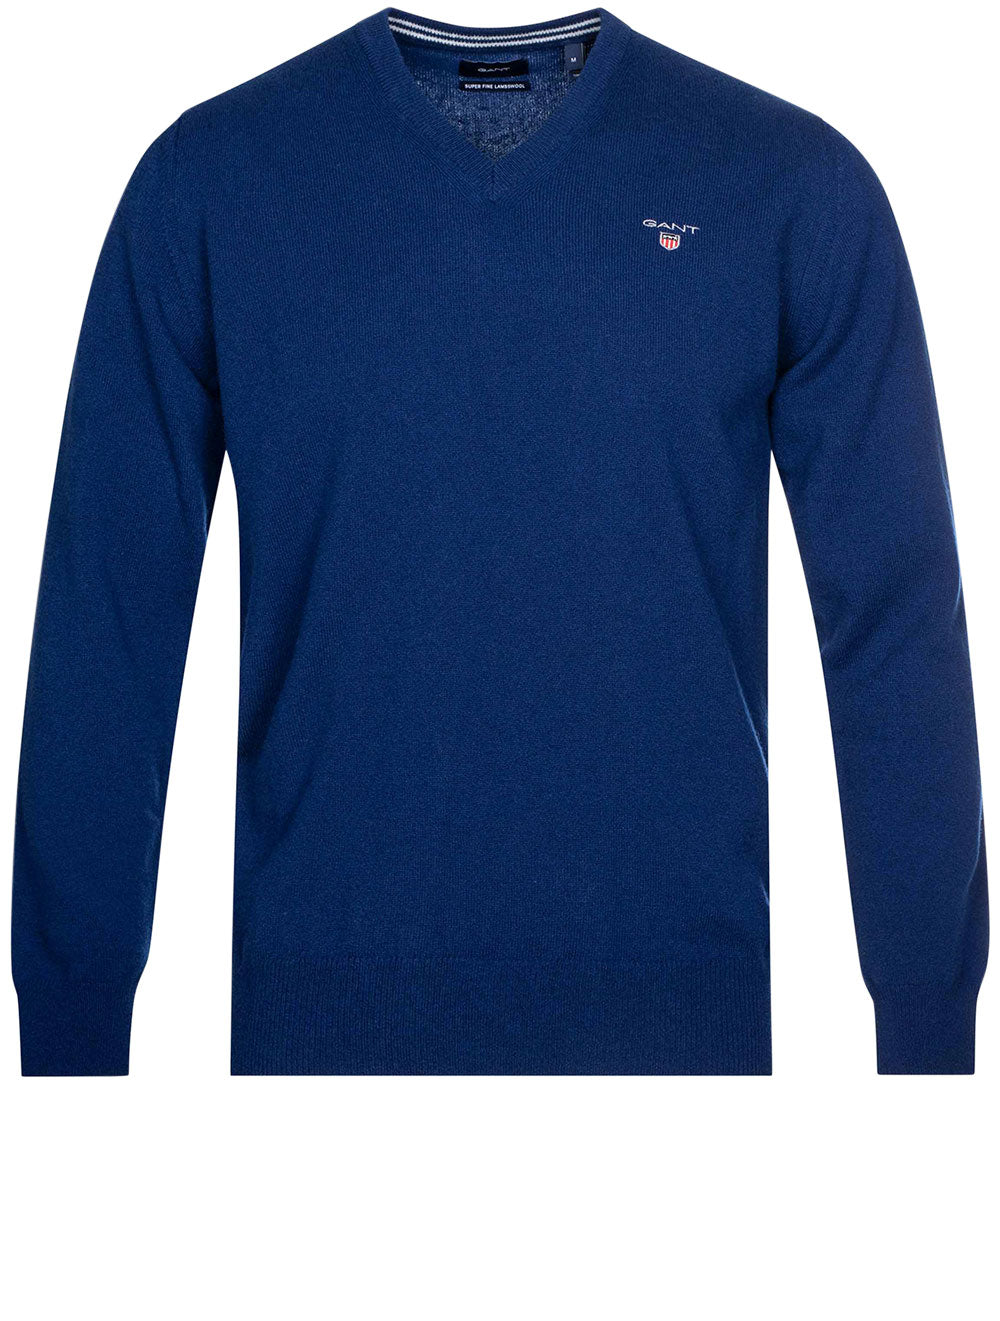 Super Fine Lambswool V-Neck Sweater College Blue